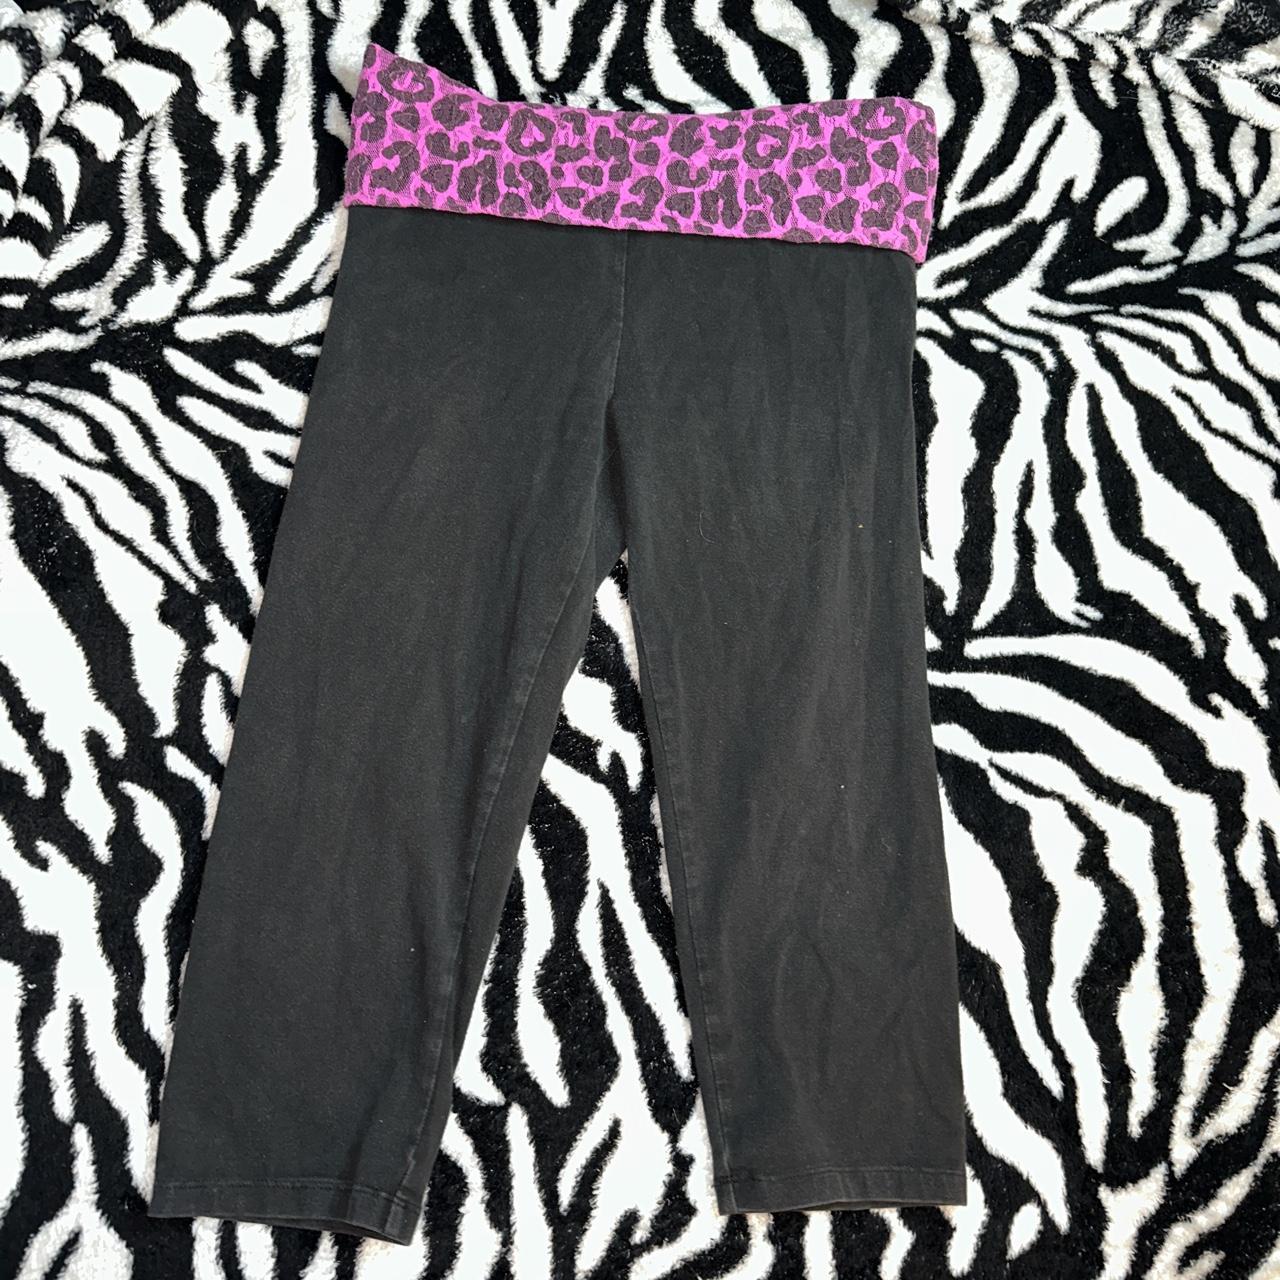 Love pink yoga pants ! With zebra print